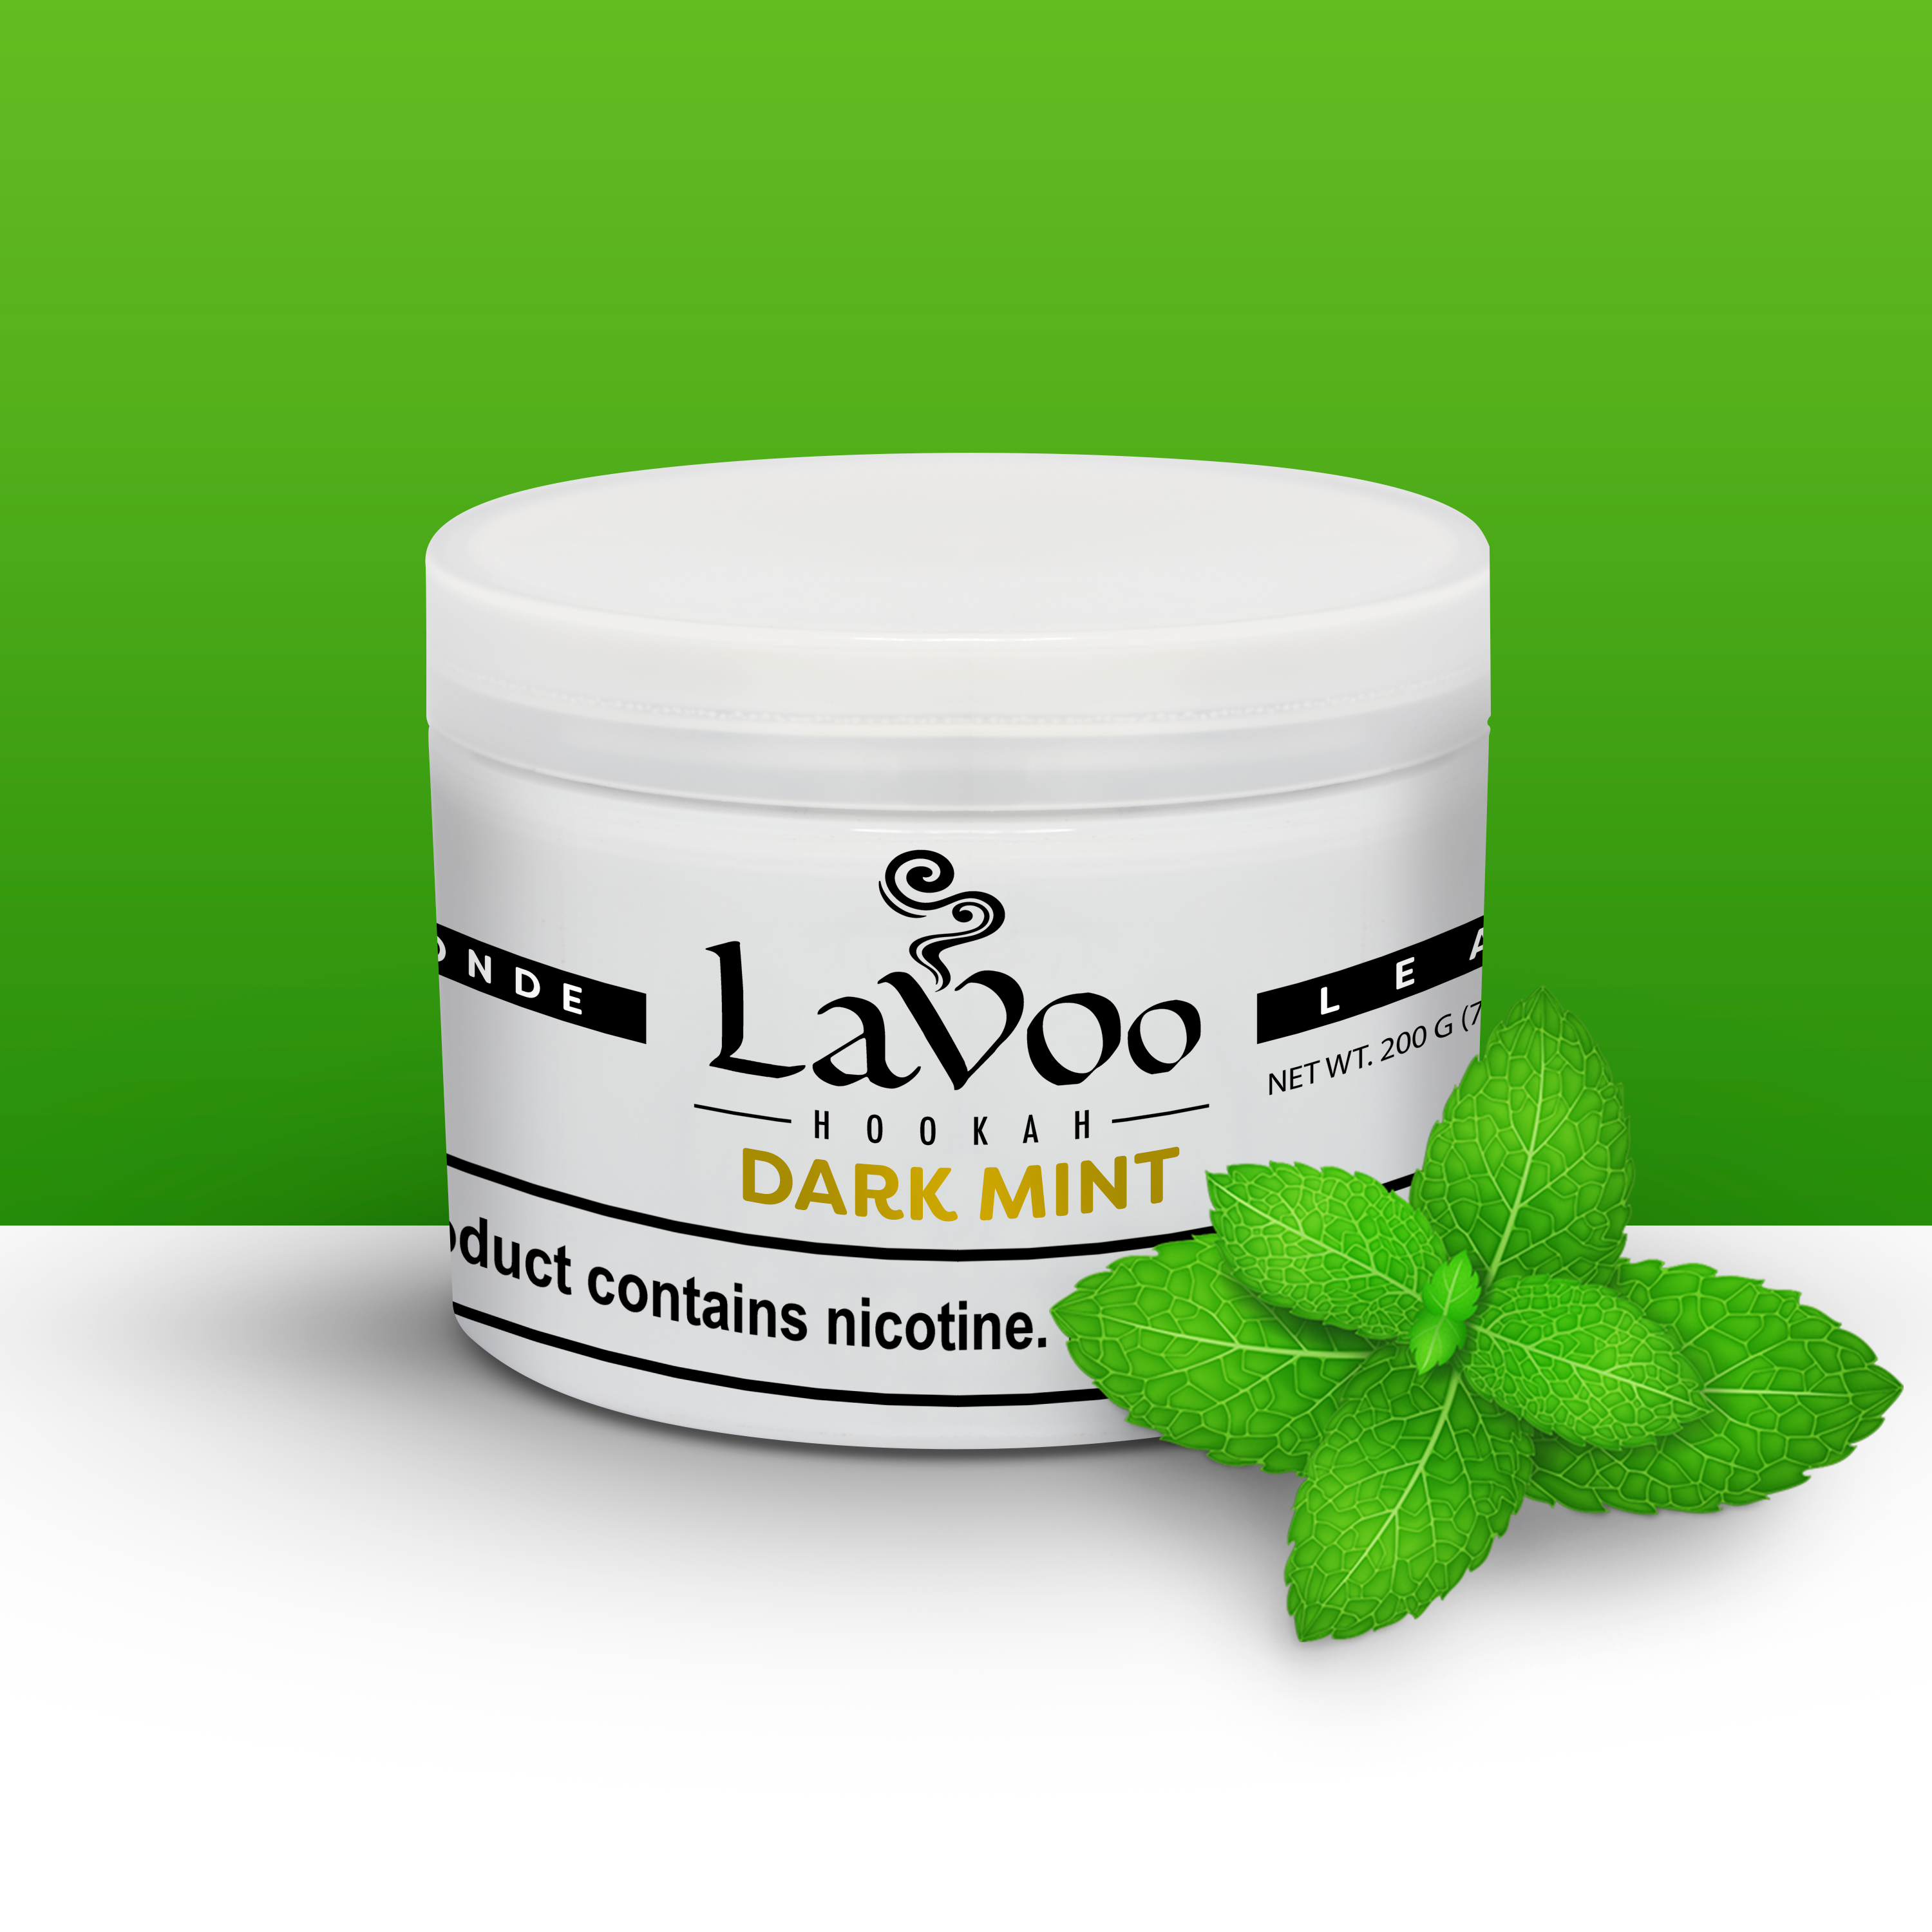 Lavoo Dark Mint Blonde Leaf Tobacco - Lavoo